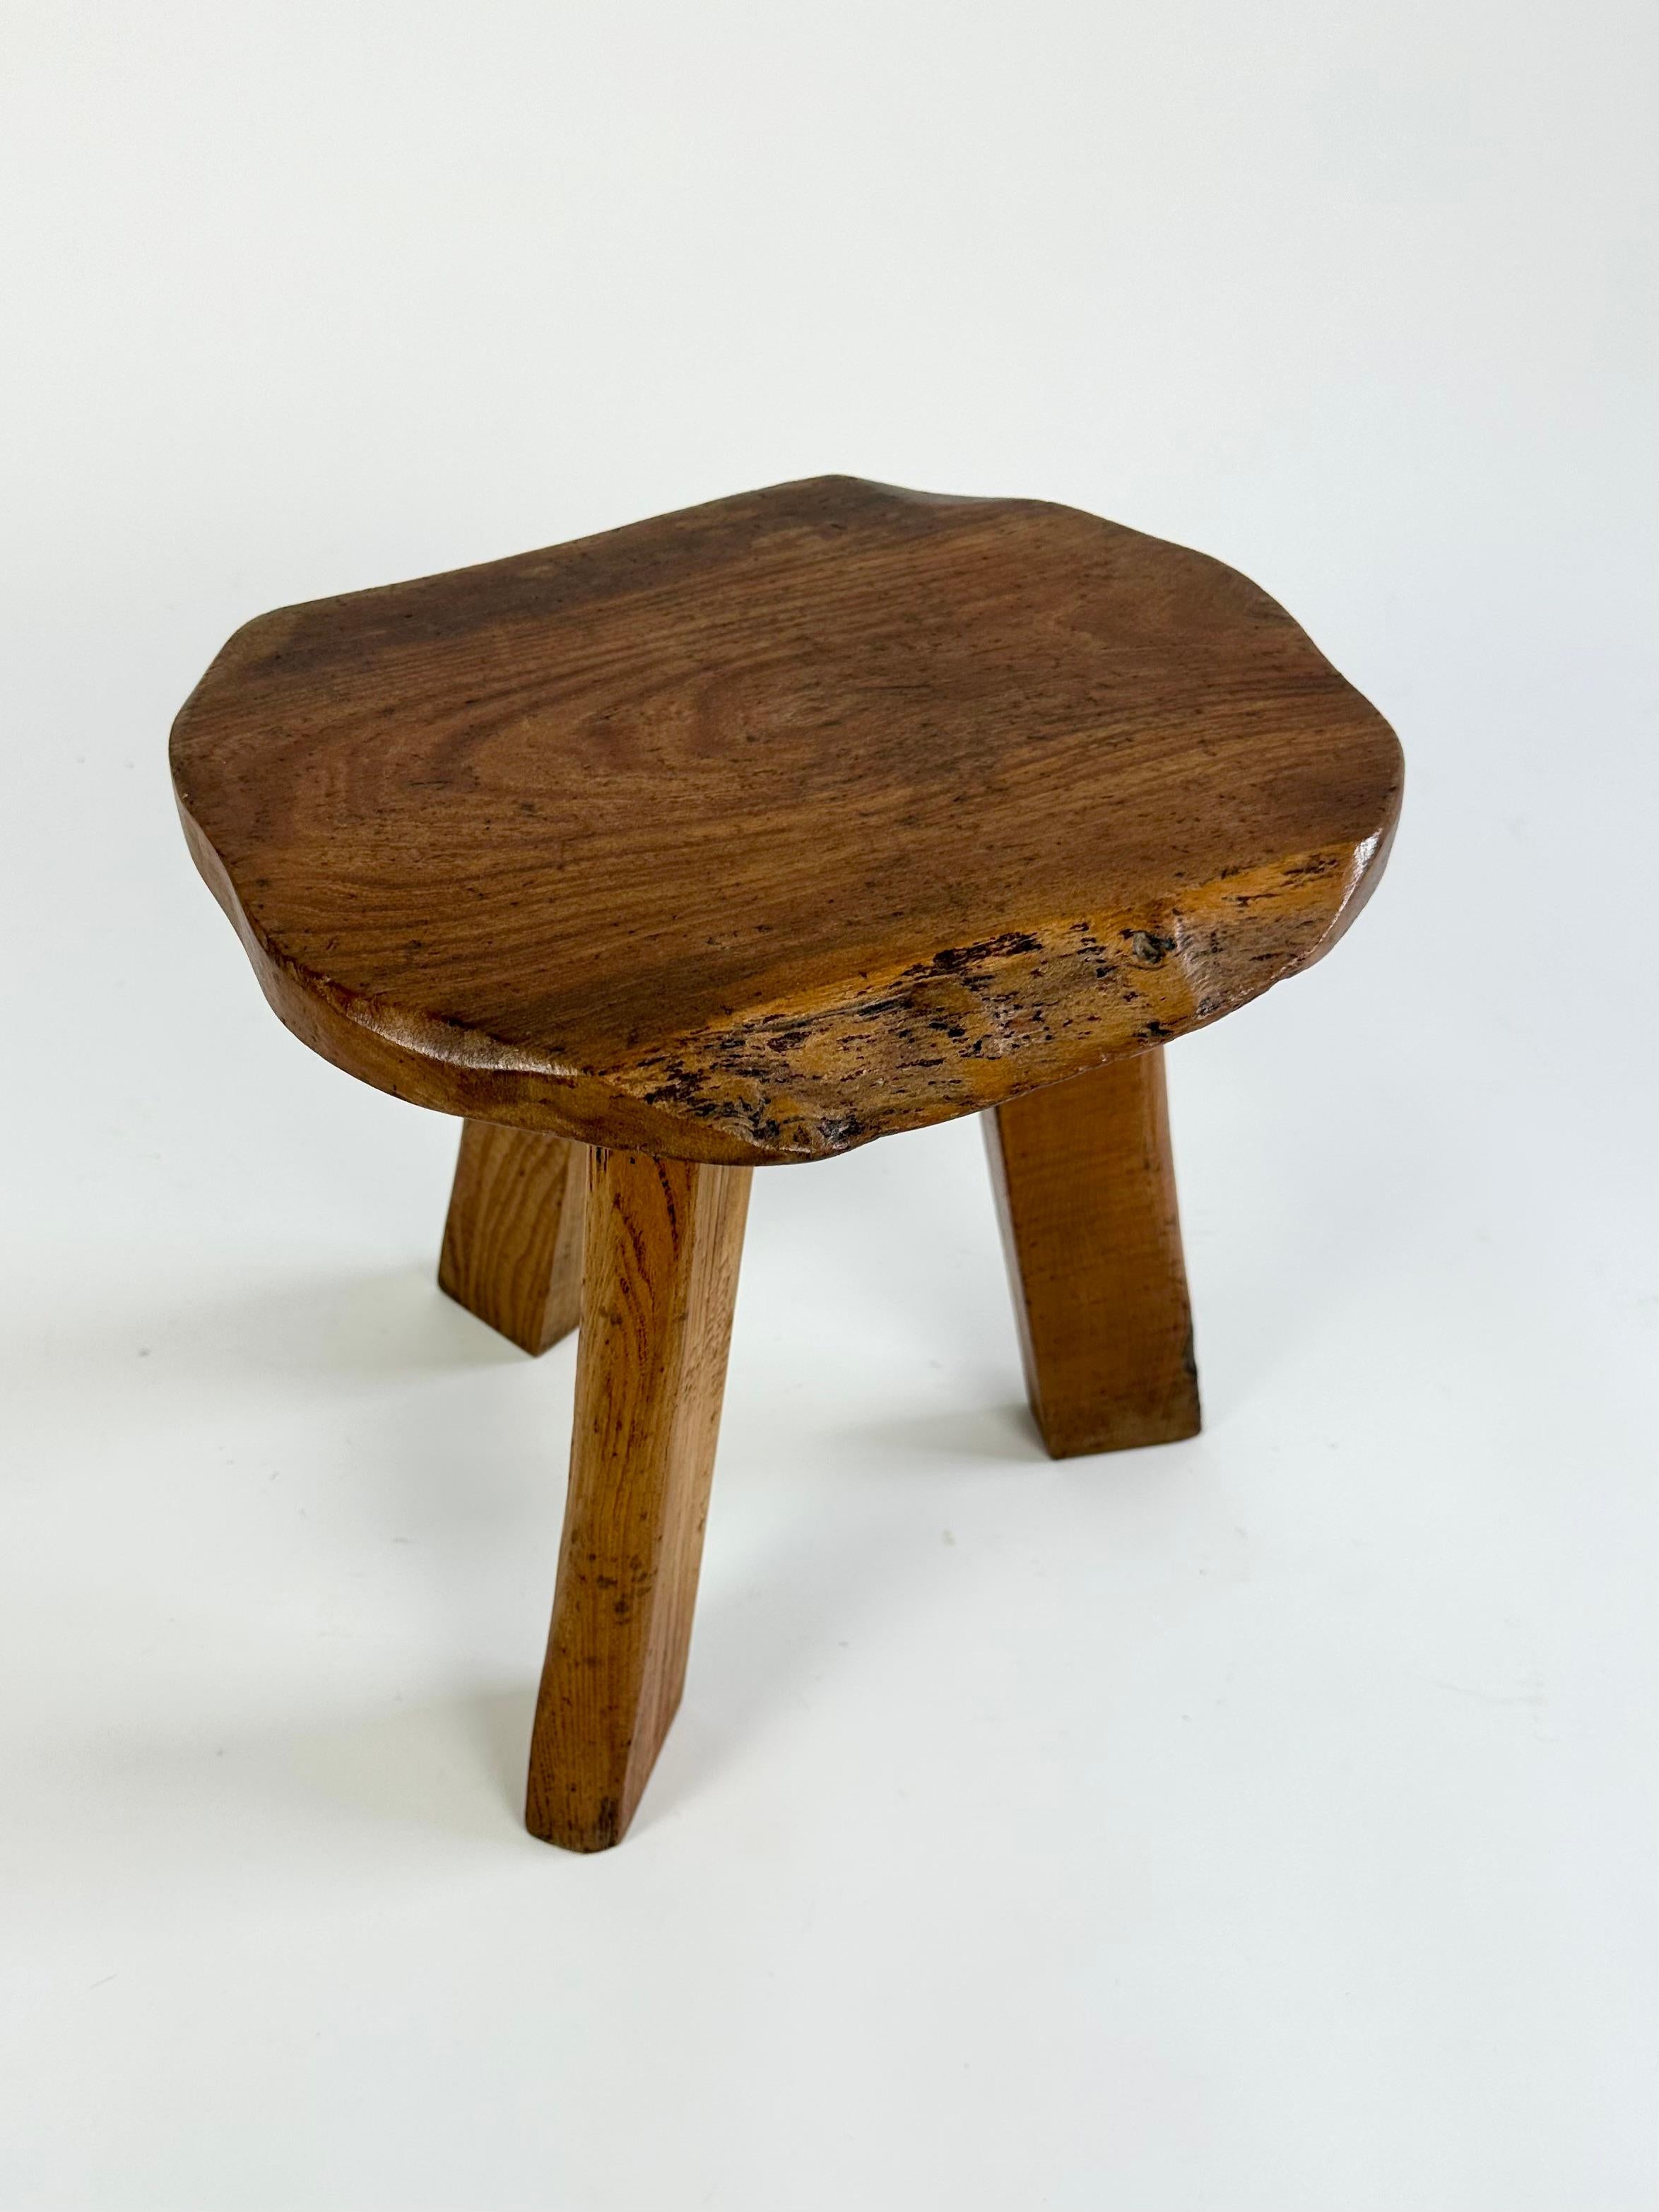 Vintage rustic stool by Wanderwood, England c.1950-60 For Sale 1